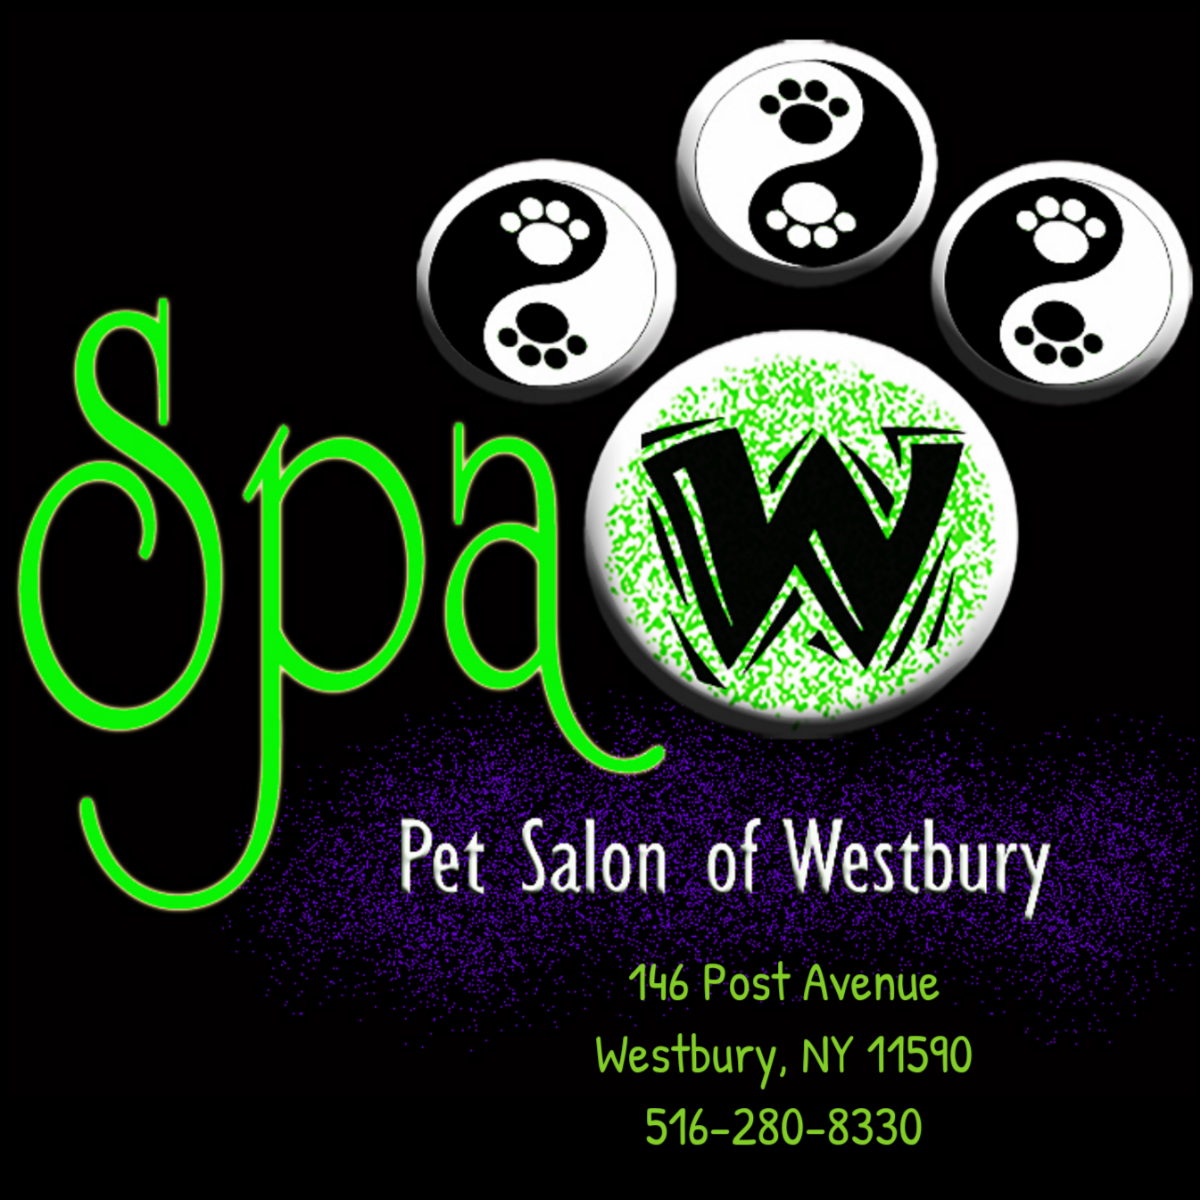 Photo of Spaw Pet Salon of Westbury in Westbury City, New York, United States - 7 Picture of Point of interest, Establishment